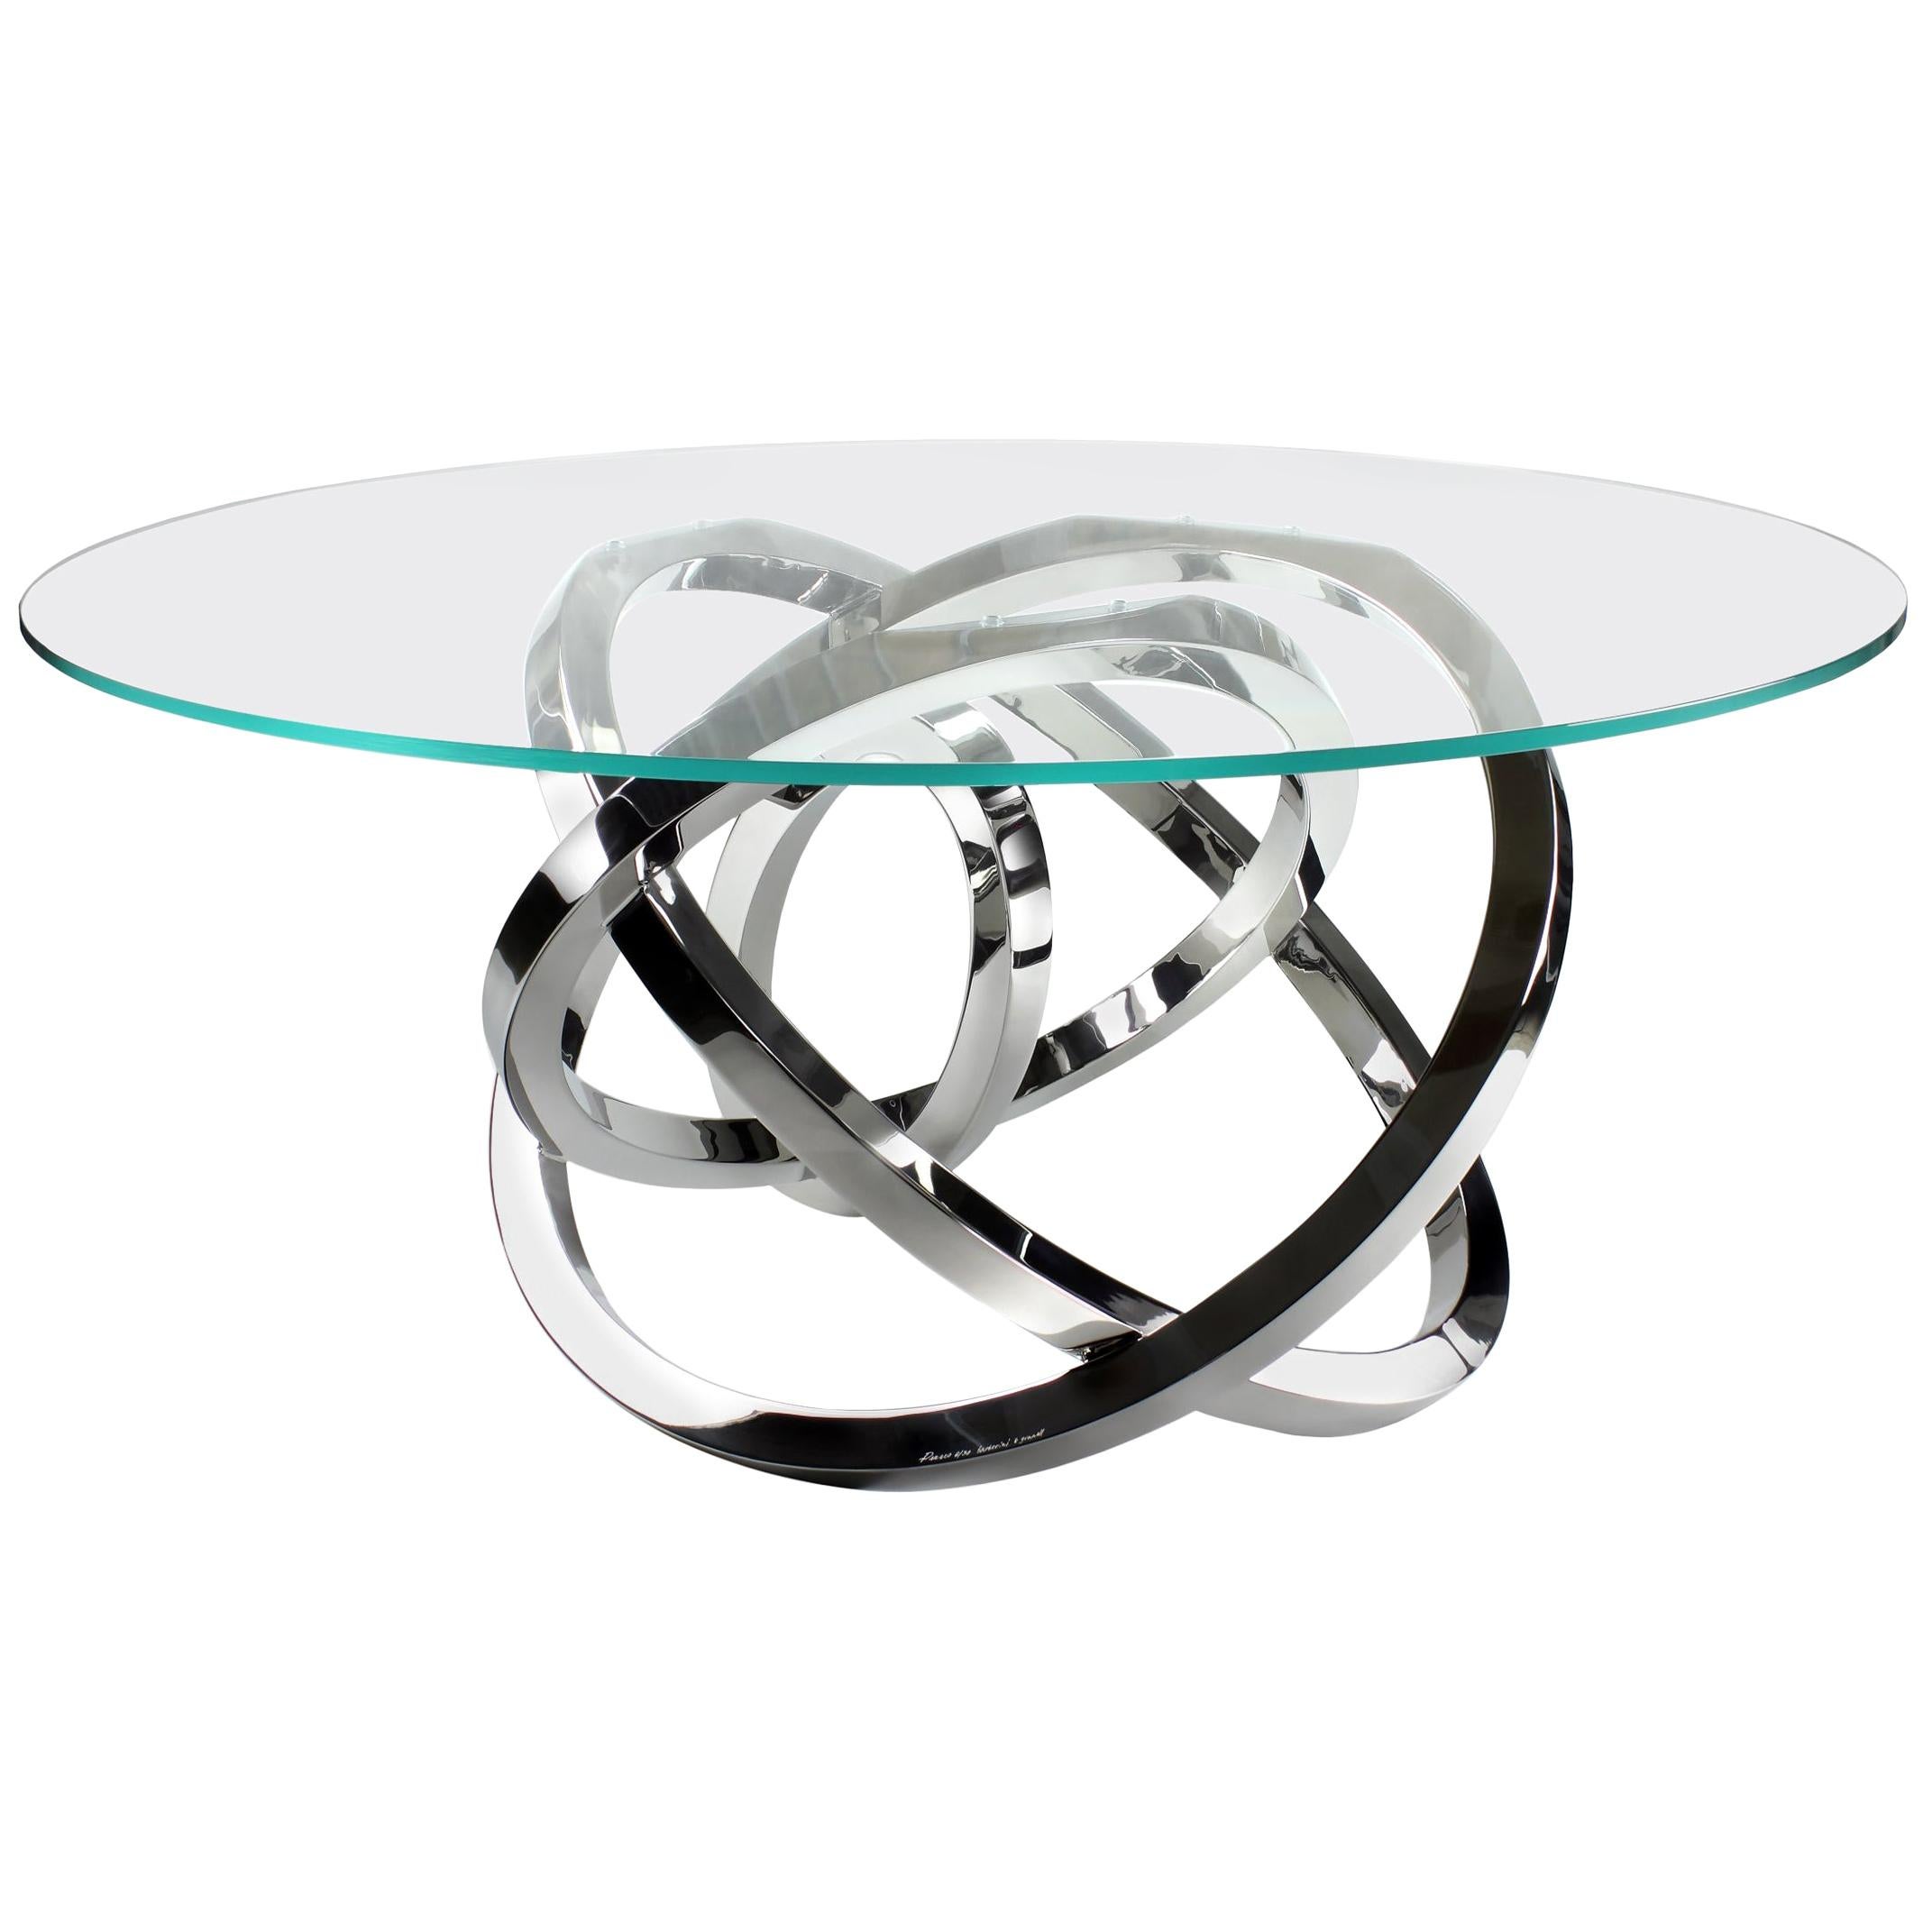 Dining Table Circular Mirror Steel Glass Crystal Collectible Design Handmade